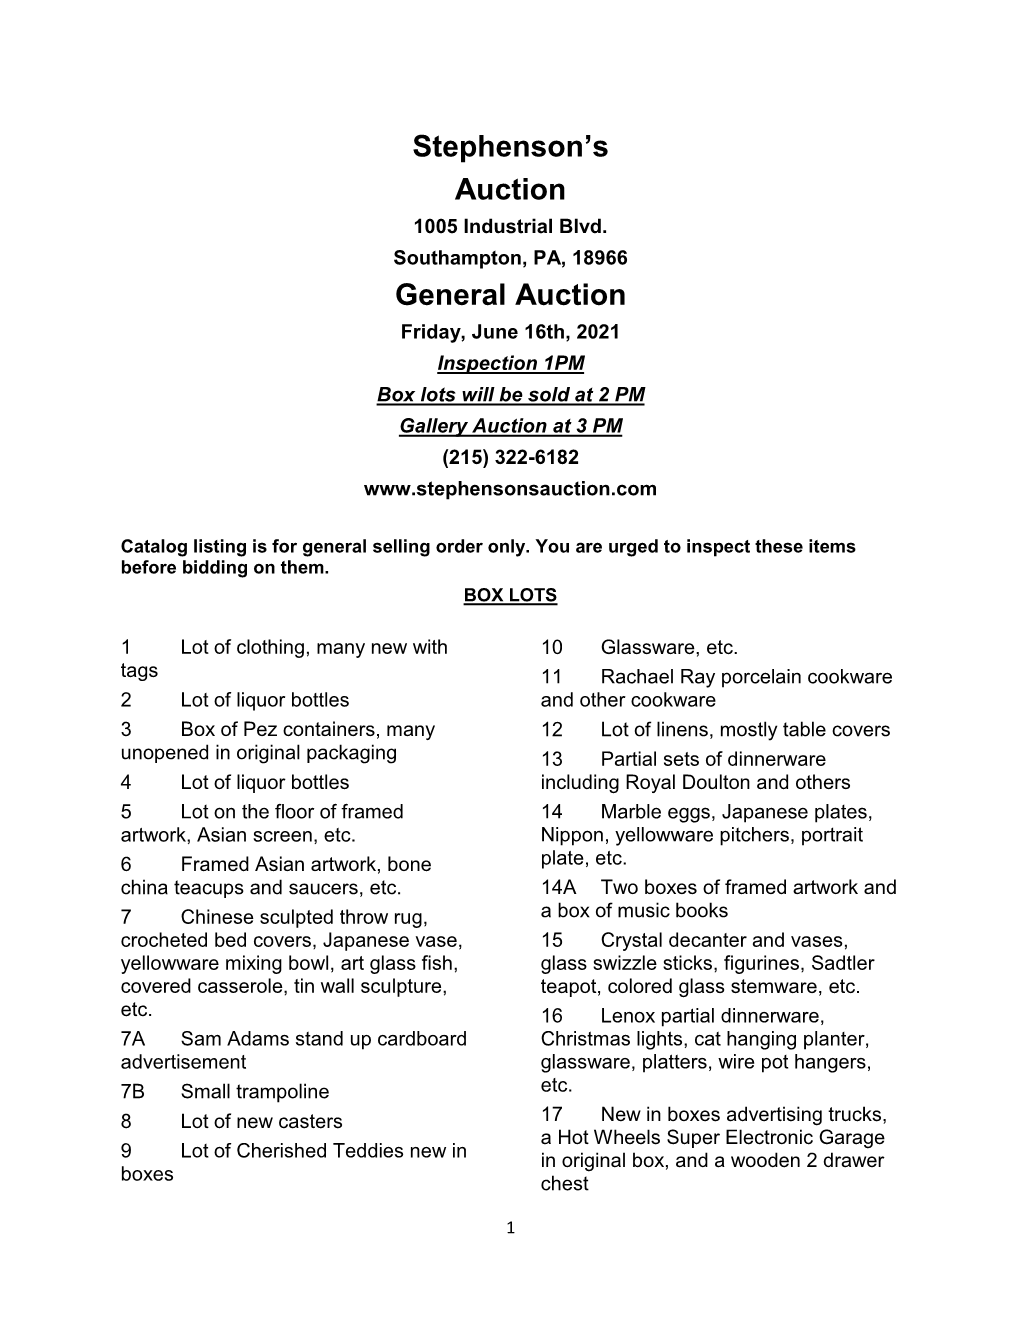 Stephenson's Auction General Auction